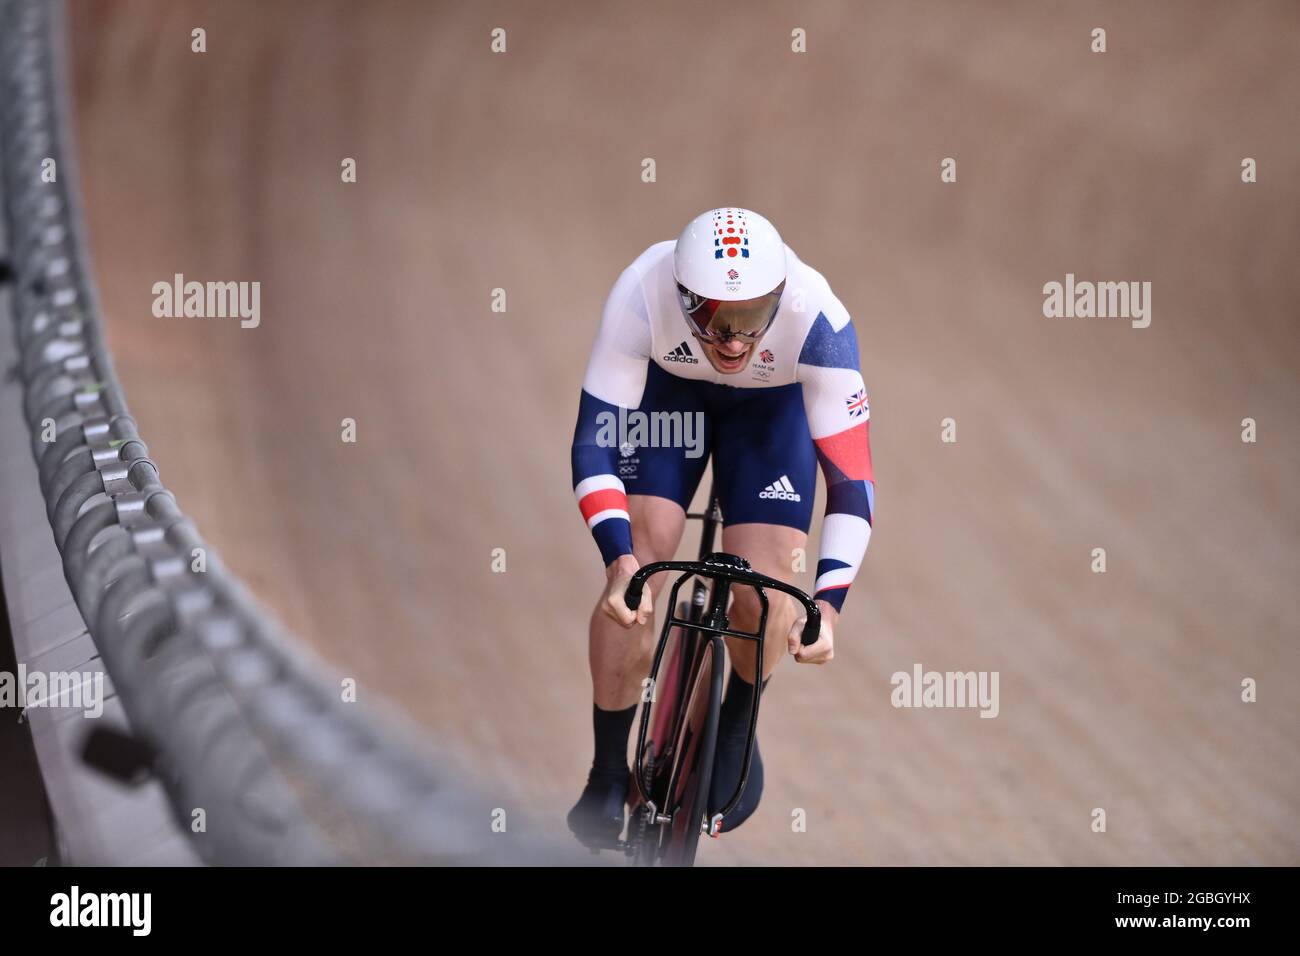 (210804) --IZU, Aug. 4, 2021 (Xinhua) -- Jason Kenny of Great Britain competes during cycling track men's sprint match at Tokyo 2020 Olympic Games, in Izu, Japan, Aug. 4, 2021. (Xinhua/Zhang Hongxiang) Stock Photo